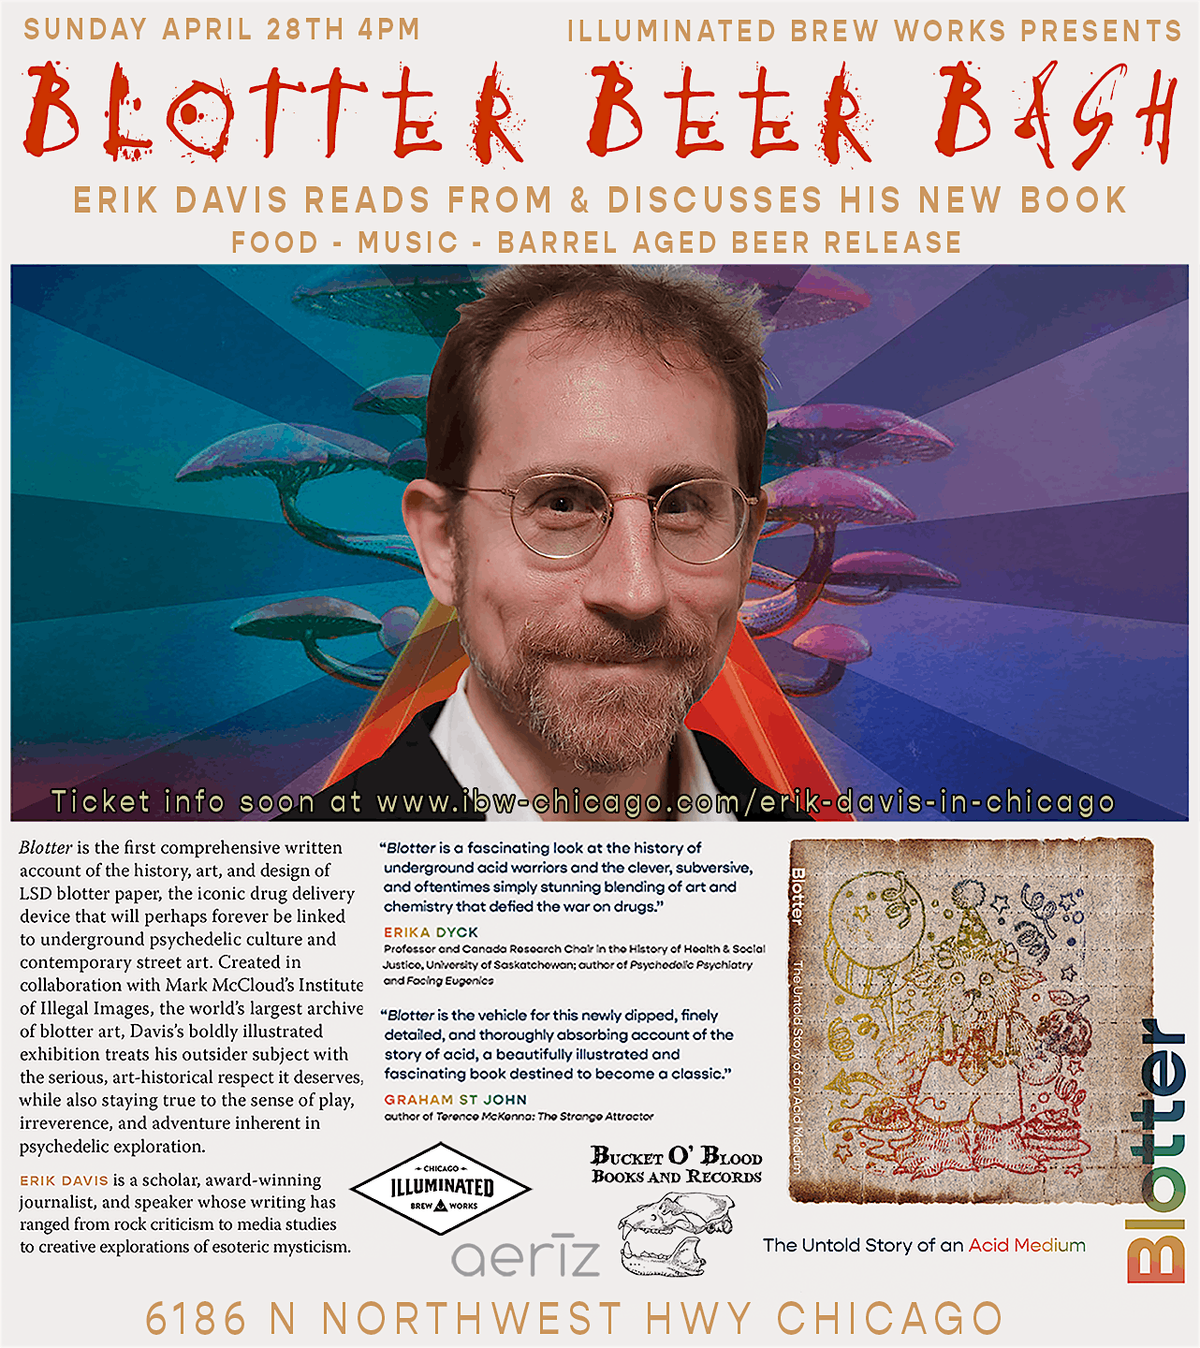 Blotter Beer Bash with Author Erik Davis